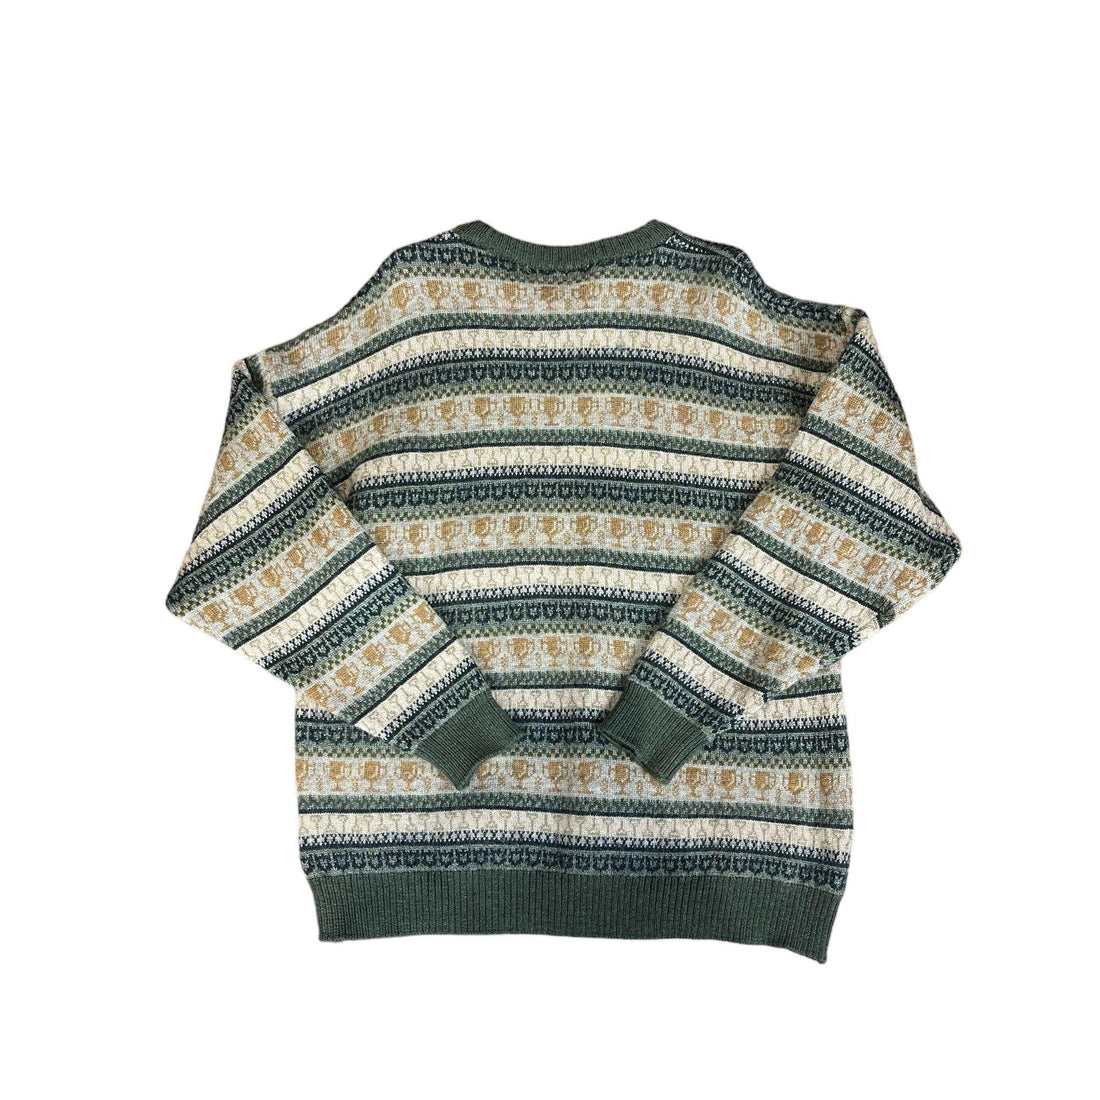 Vintage 90s Burberry Knitted Sweatshirt - Large - The Streetwear Studio